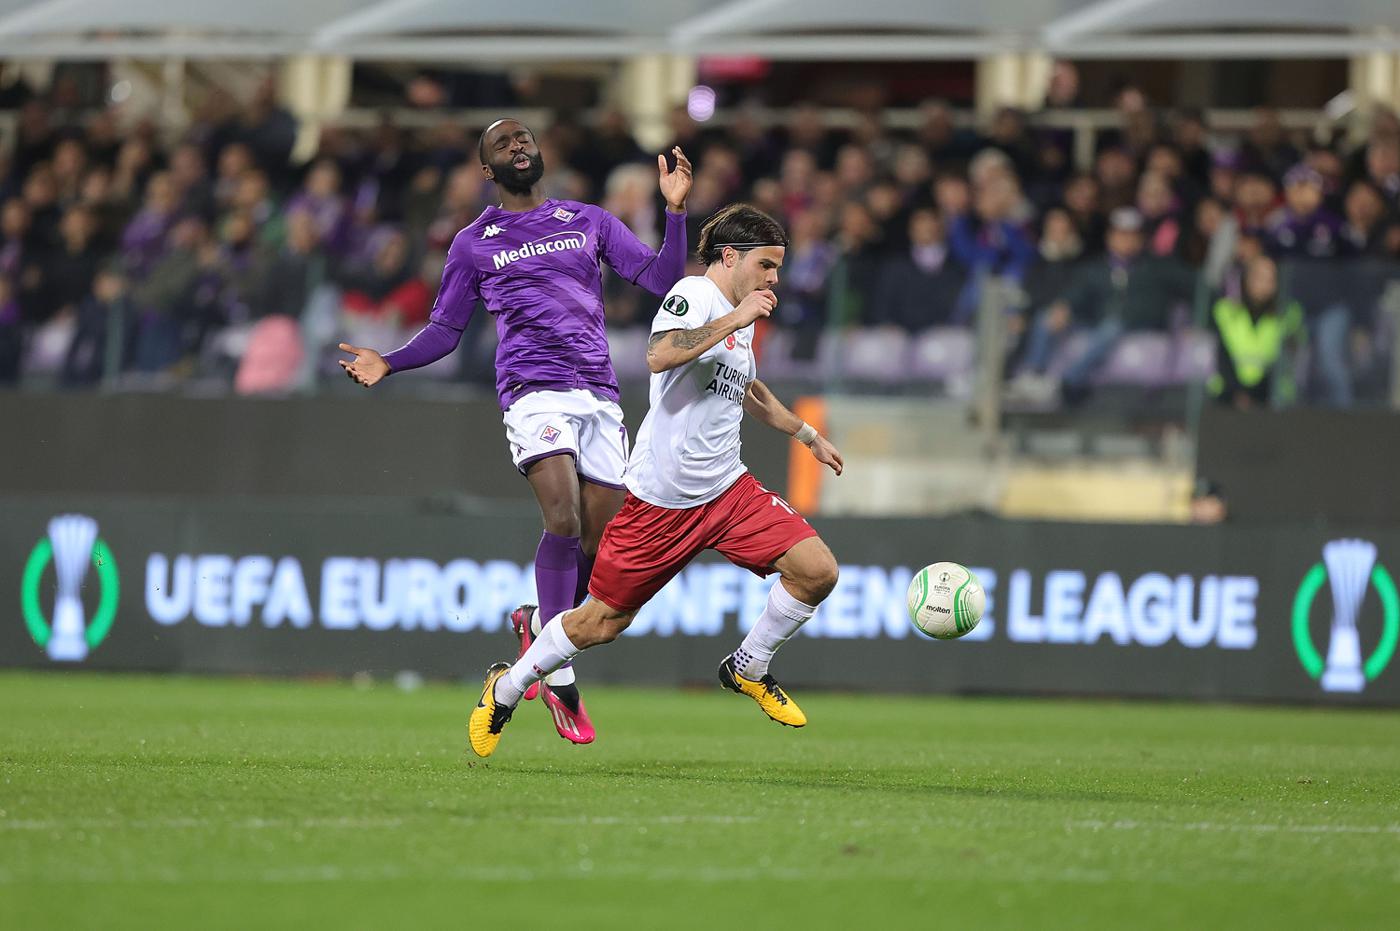 Sivasspor v Fiorentina - 1:4. Conference League. Recenzja meczu, statystyki.